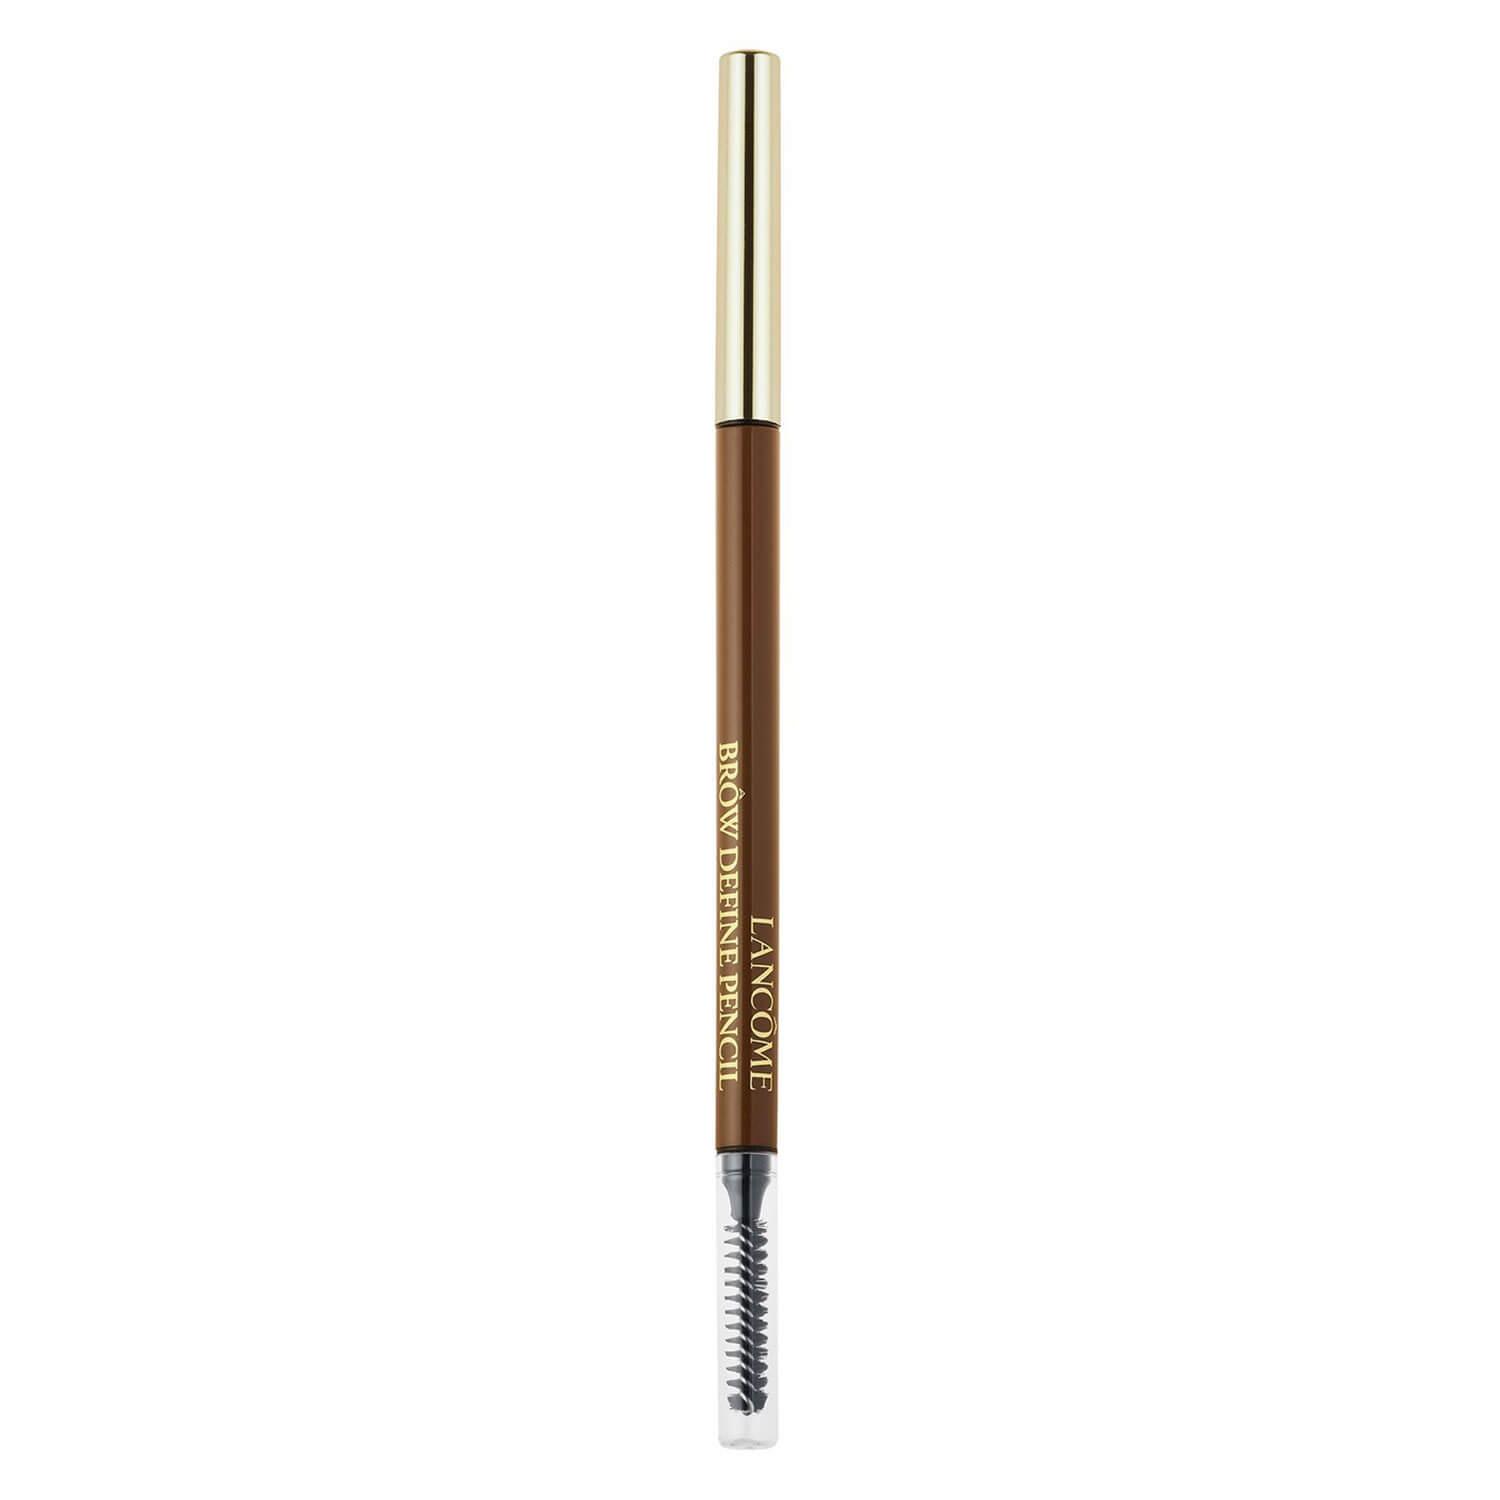 Lancôme Brows - Brow Define Pencil Brown 06